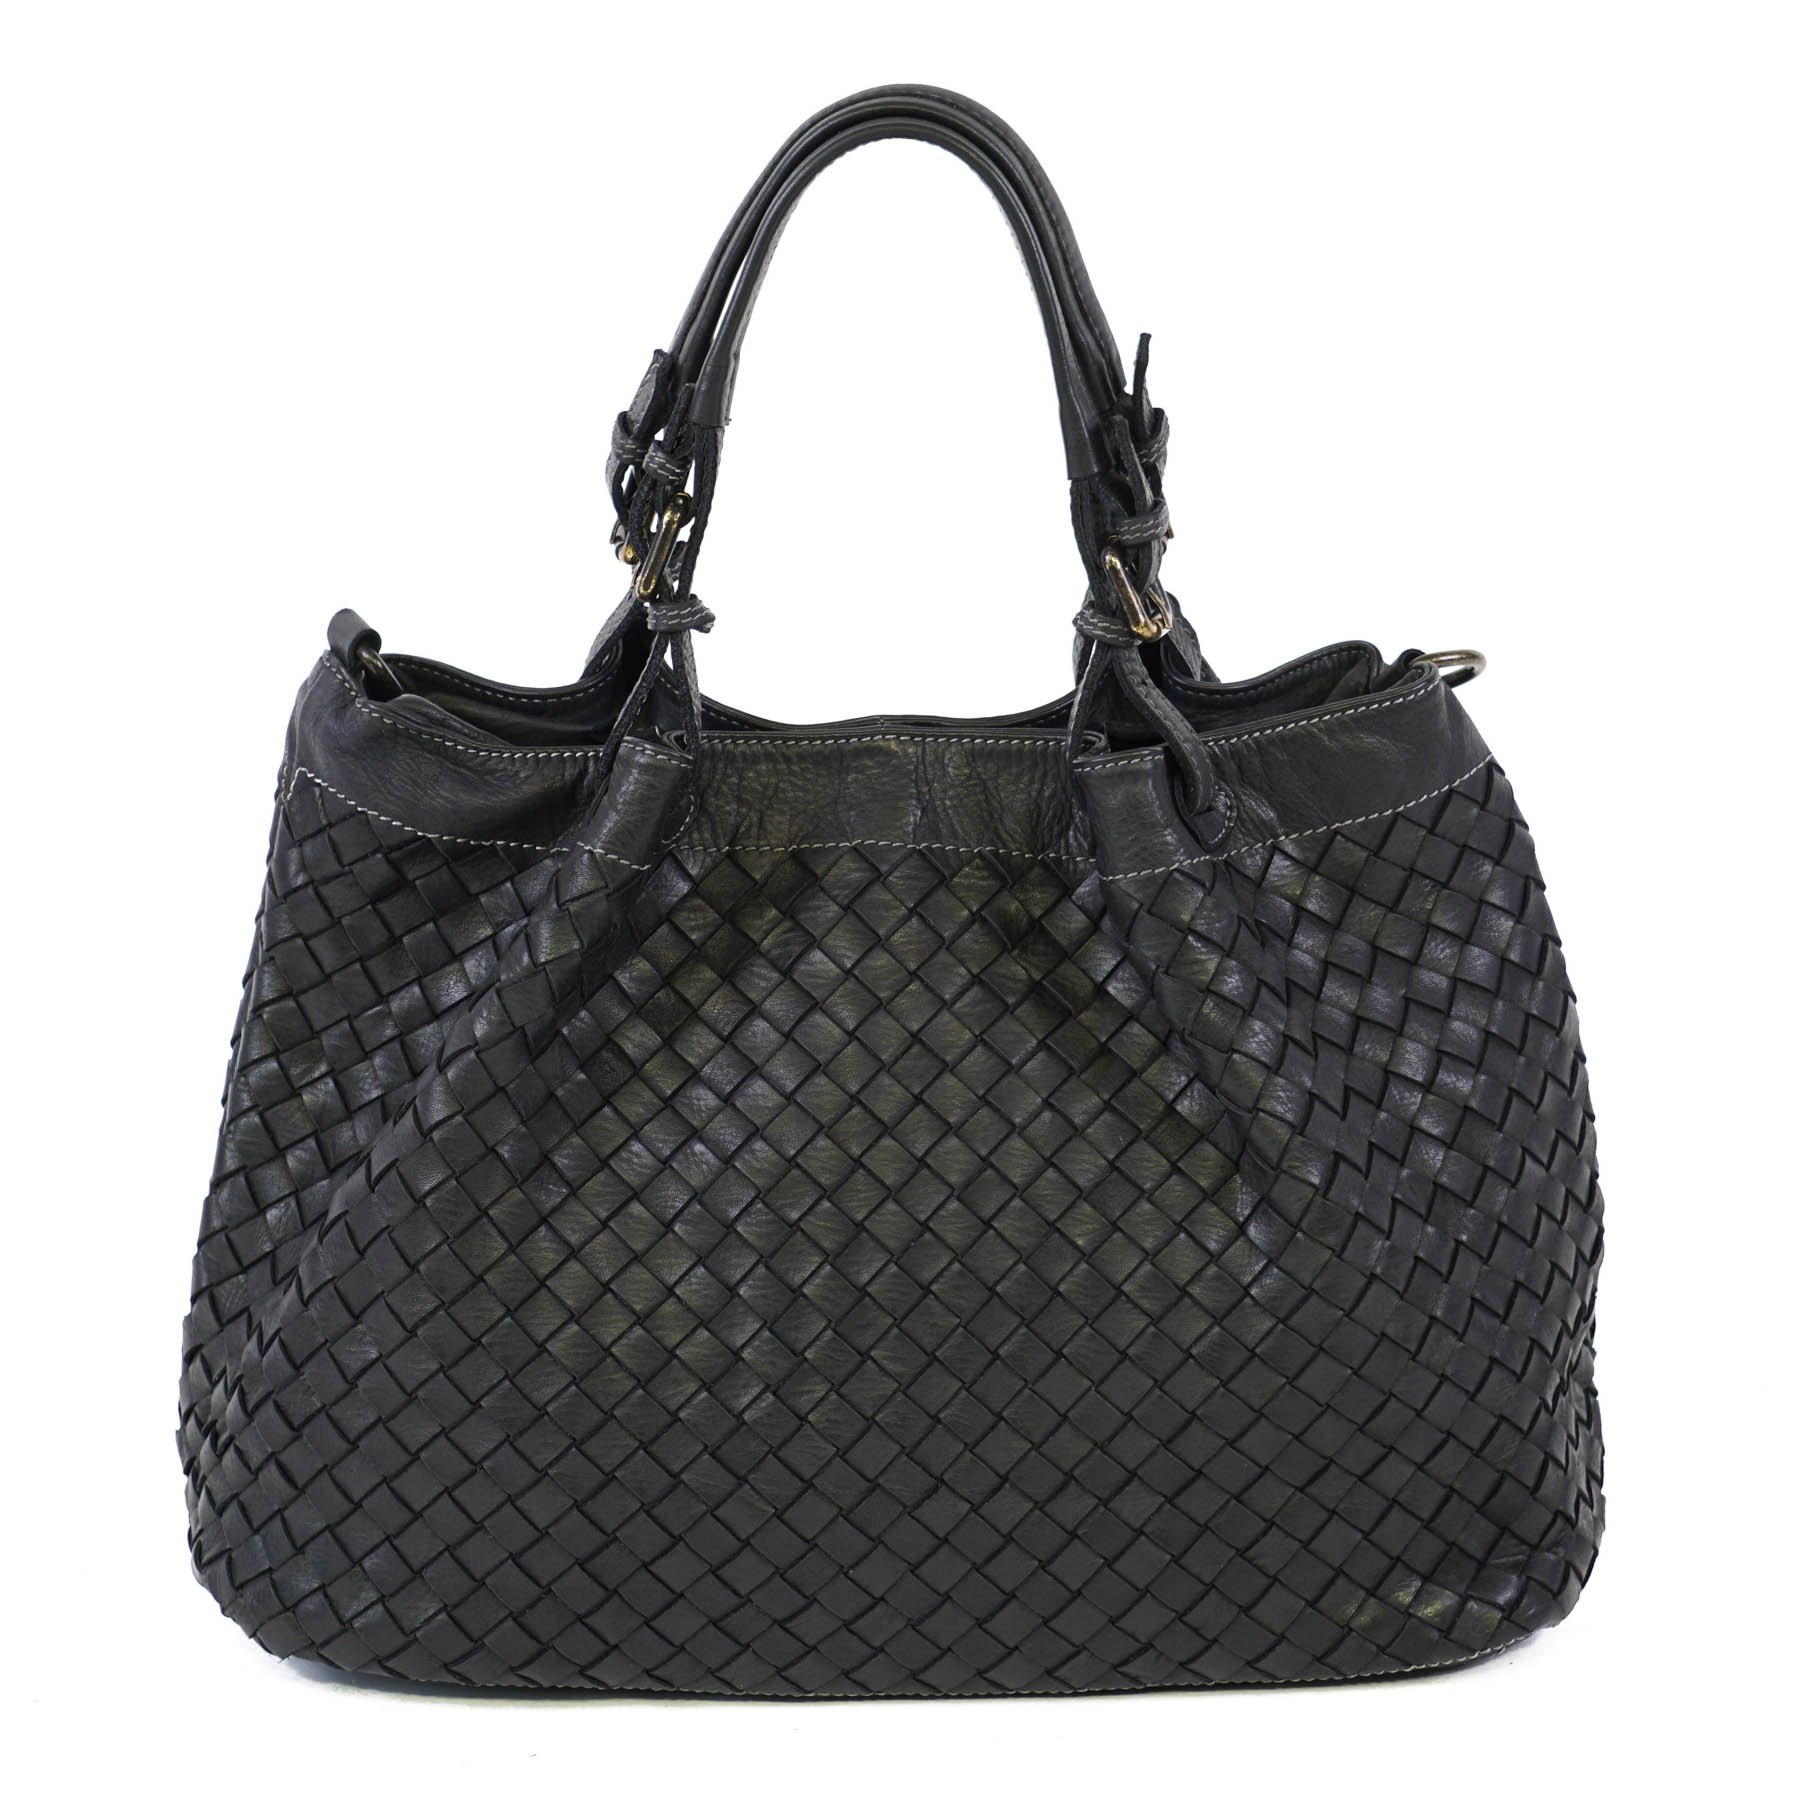 Woven genuine leather women handbag